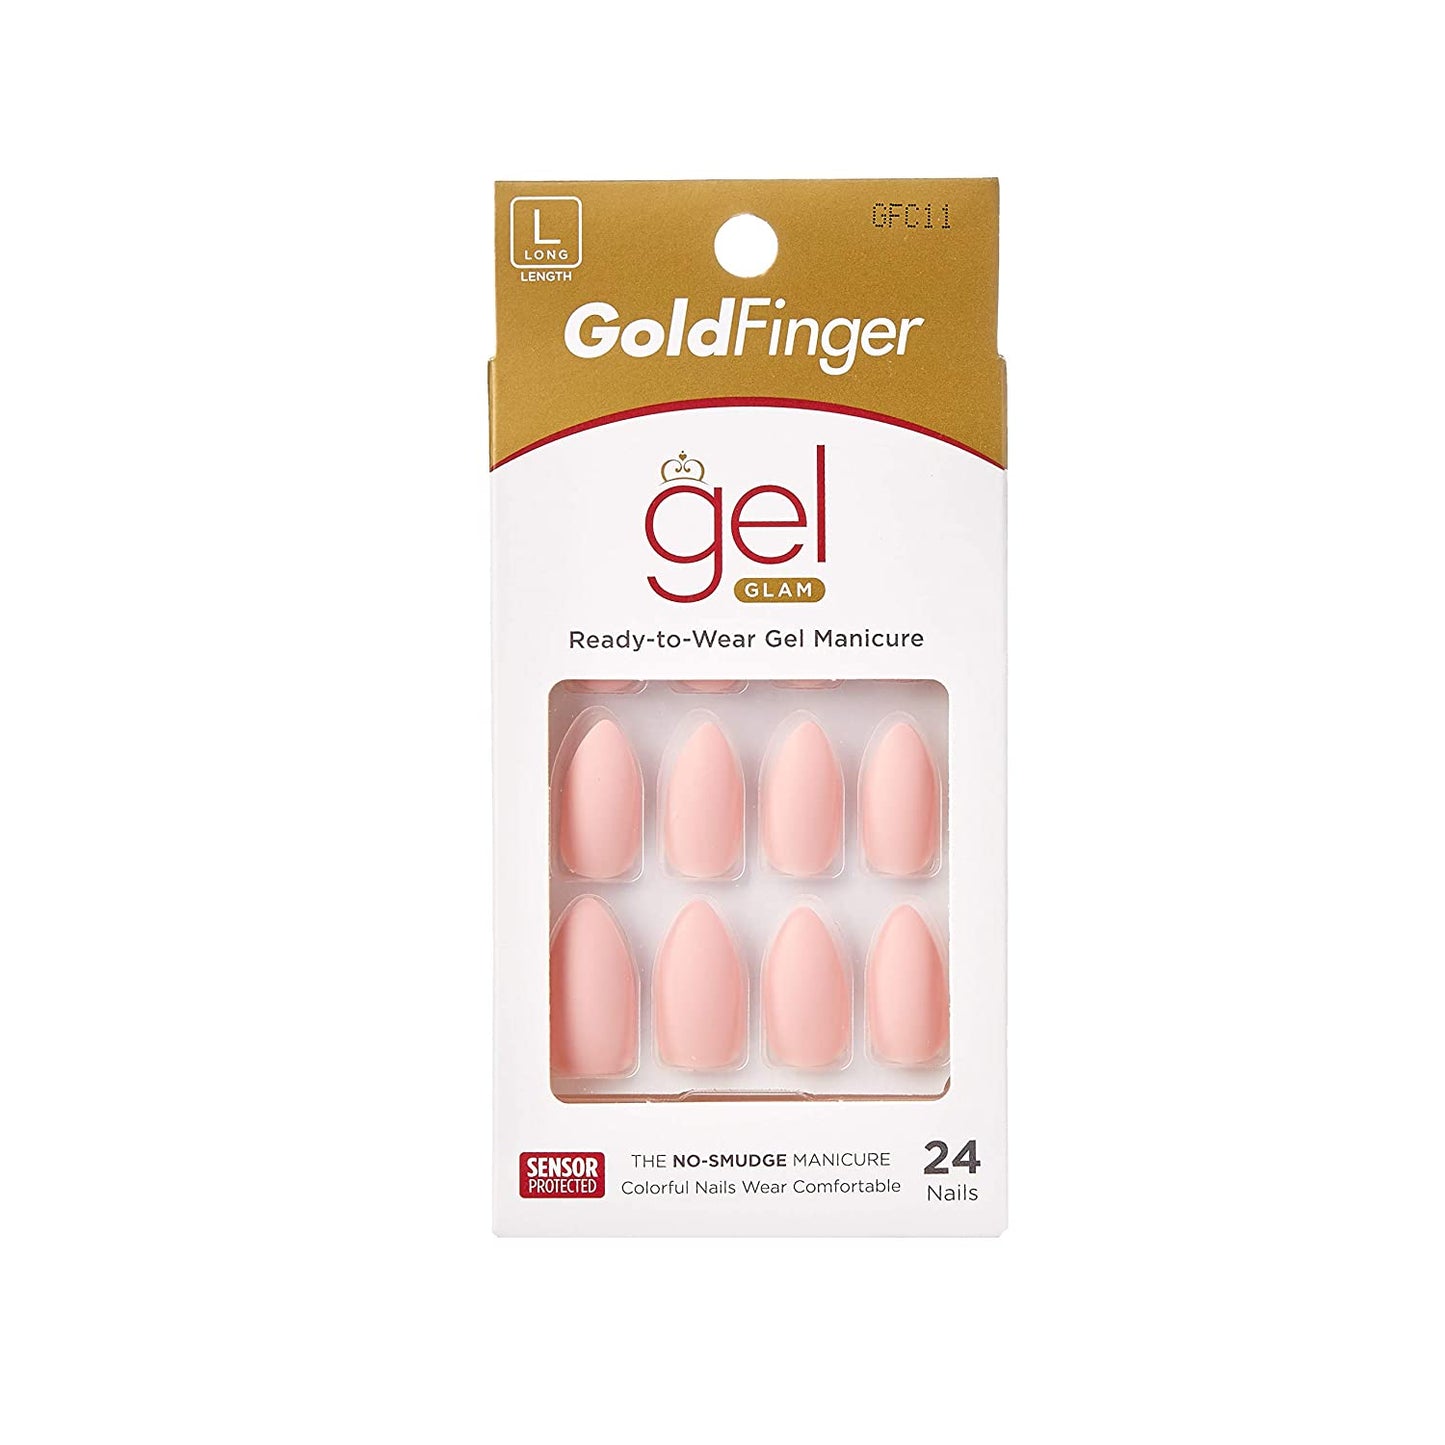 KISS GoldFinger Gel Glam Manicure Nails GFC11